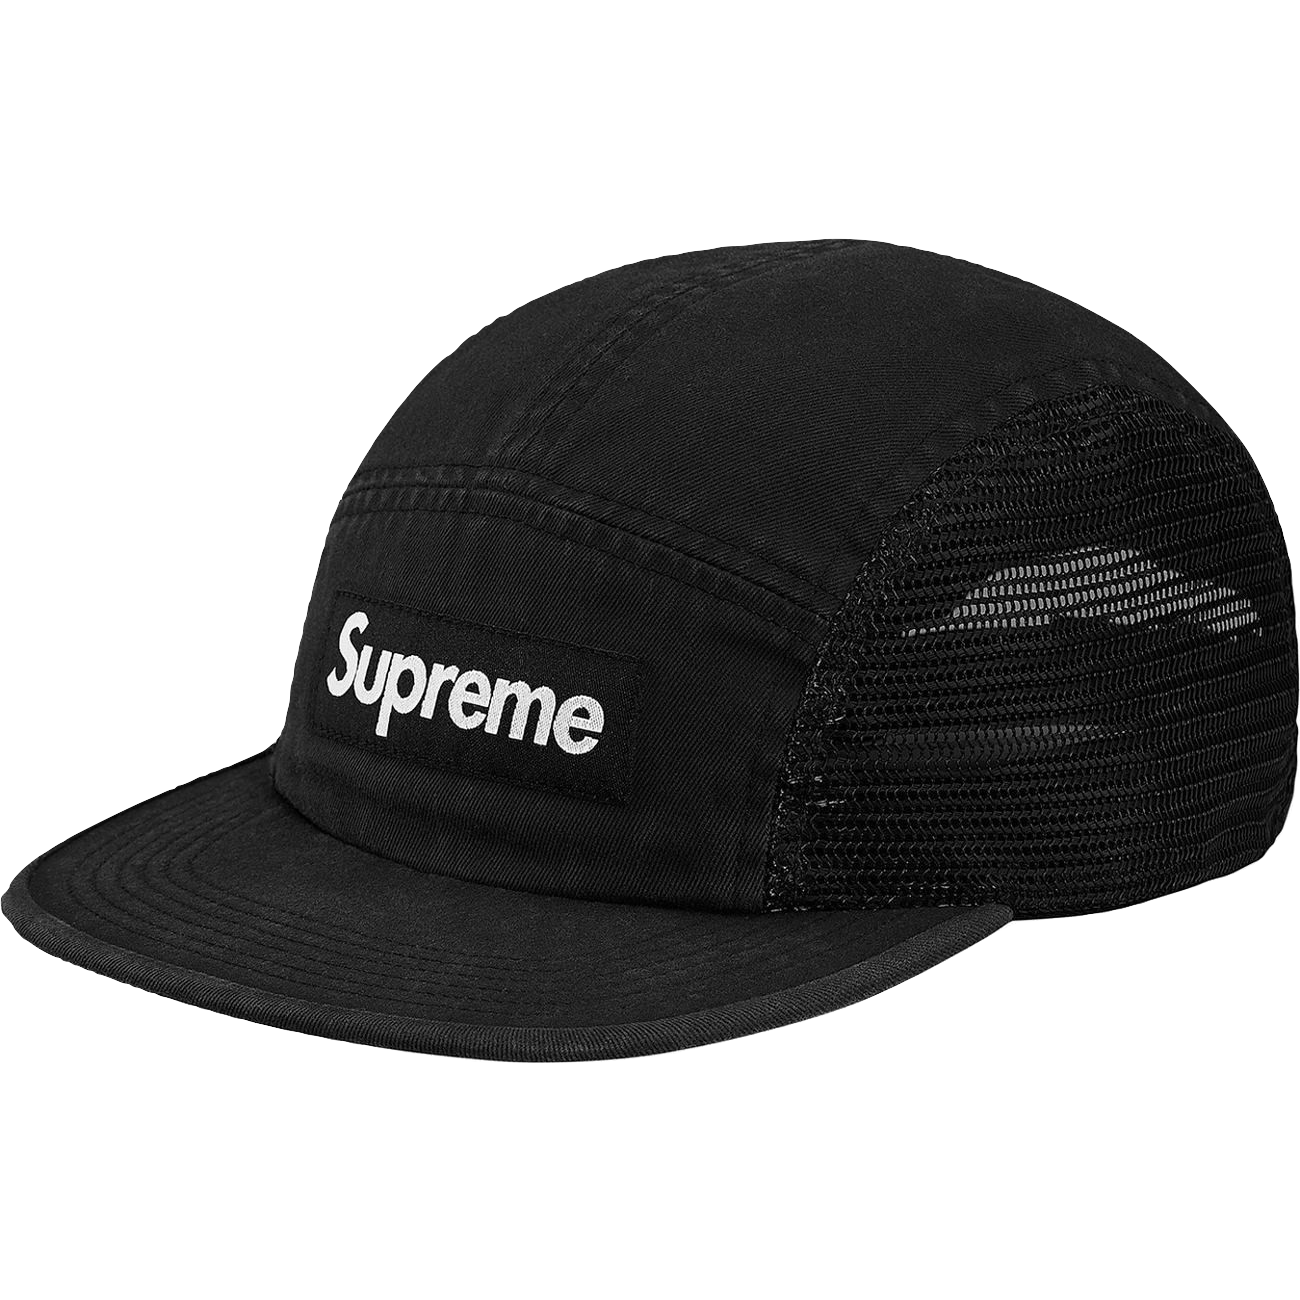 Supreme Mesh Side Panel Camp Cap - Black